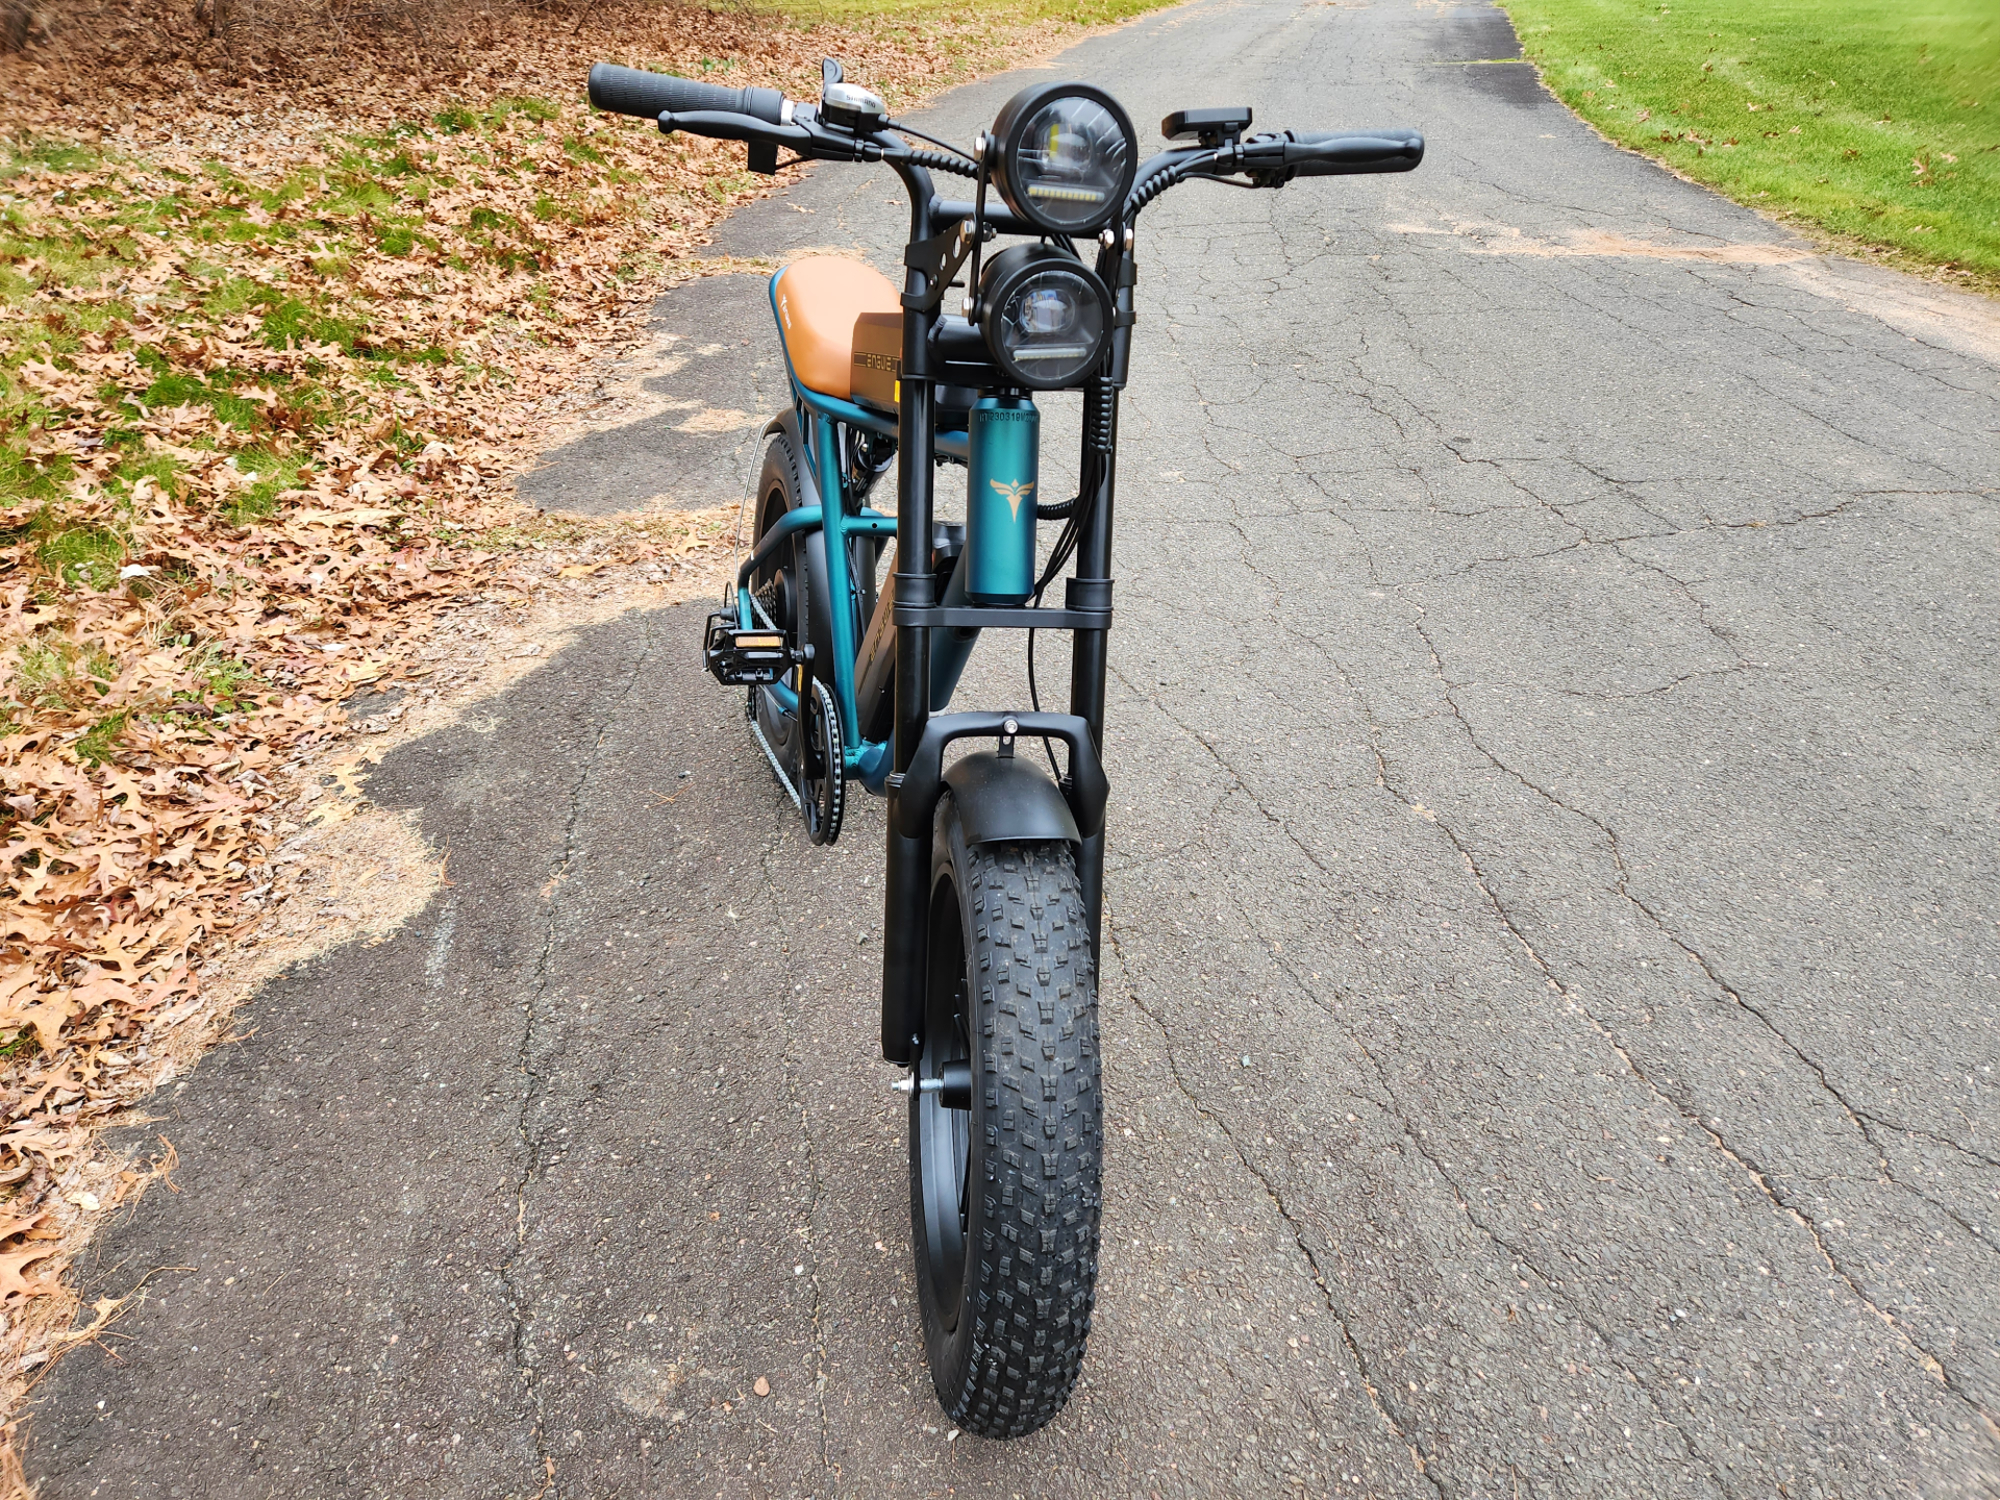 Engwe M20 e-bike レビュー: モペットの外観、クルーザーの快適さ